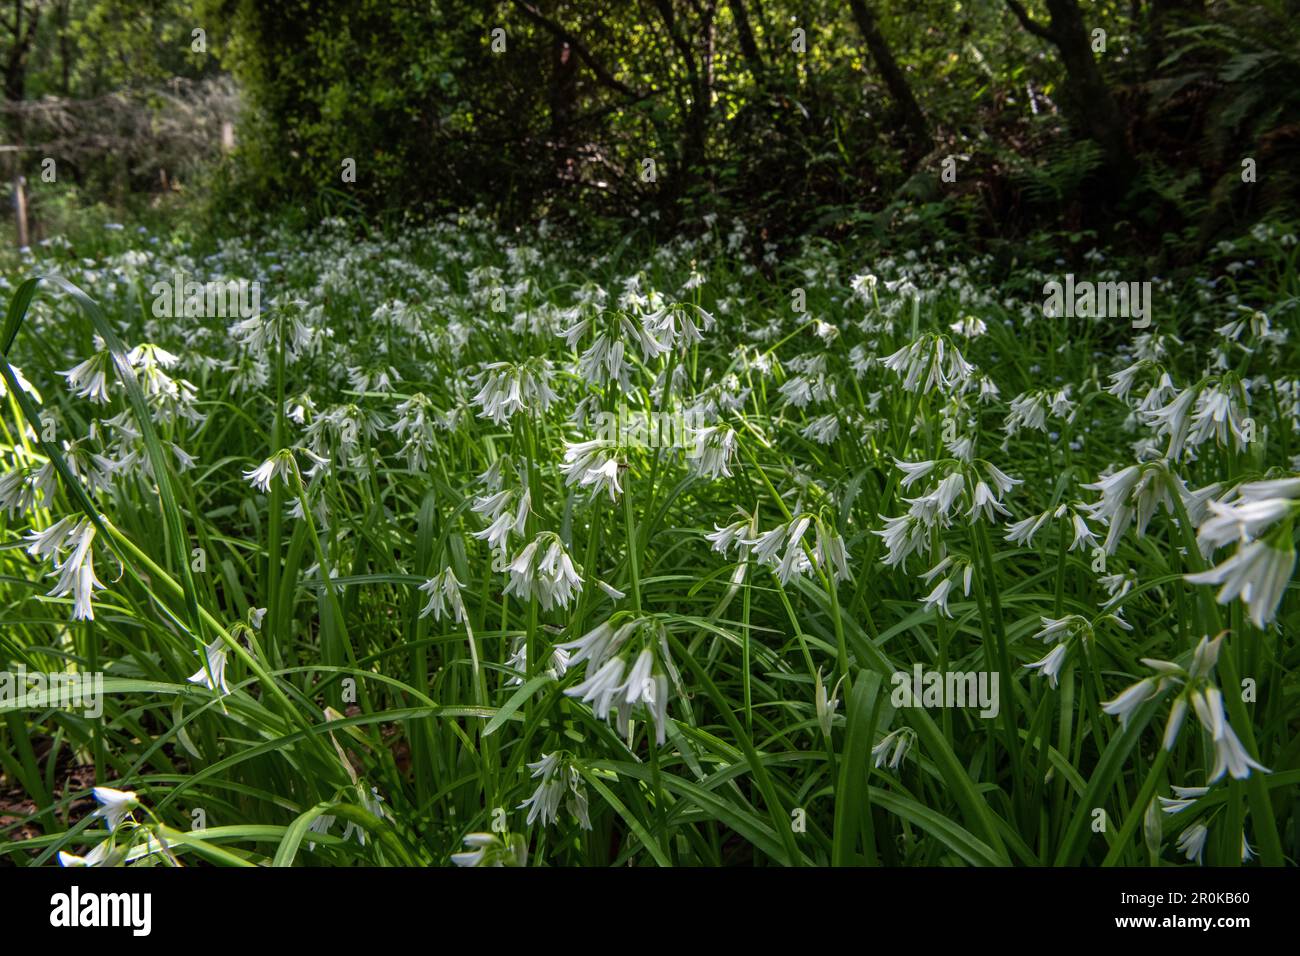 Allium triquetrum, the three cornered leek, onion or garlic is an nonnative plant invasive in California - here a dense grove of white flowers. Stock Photo